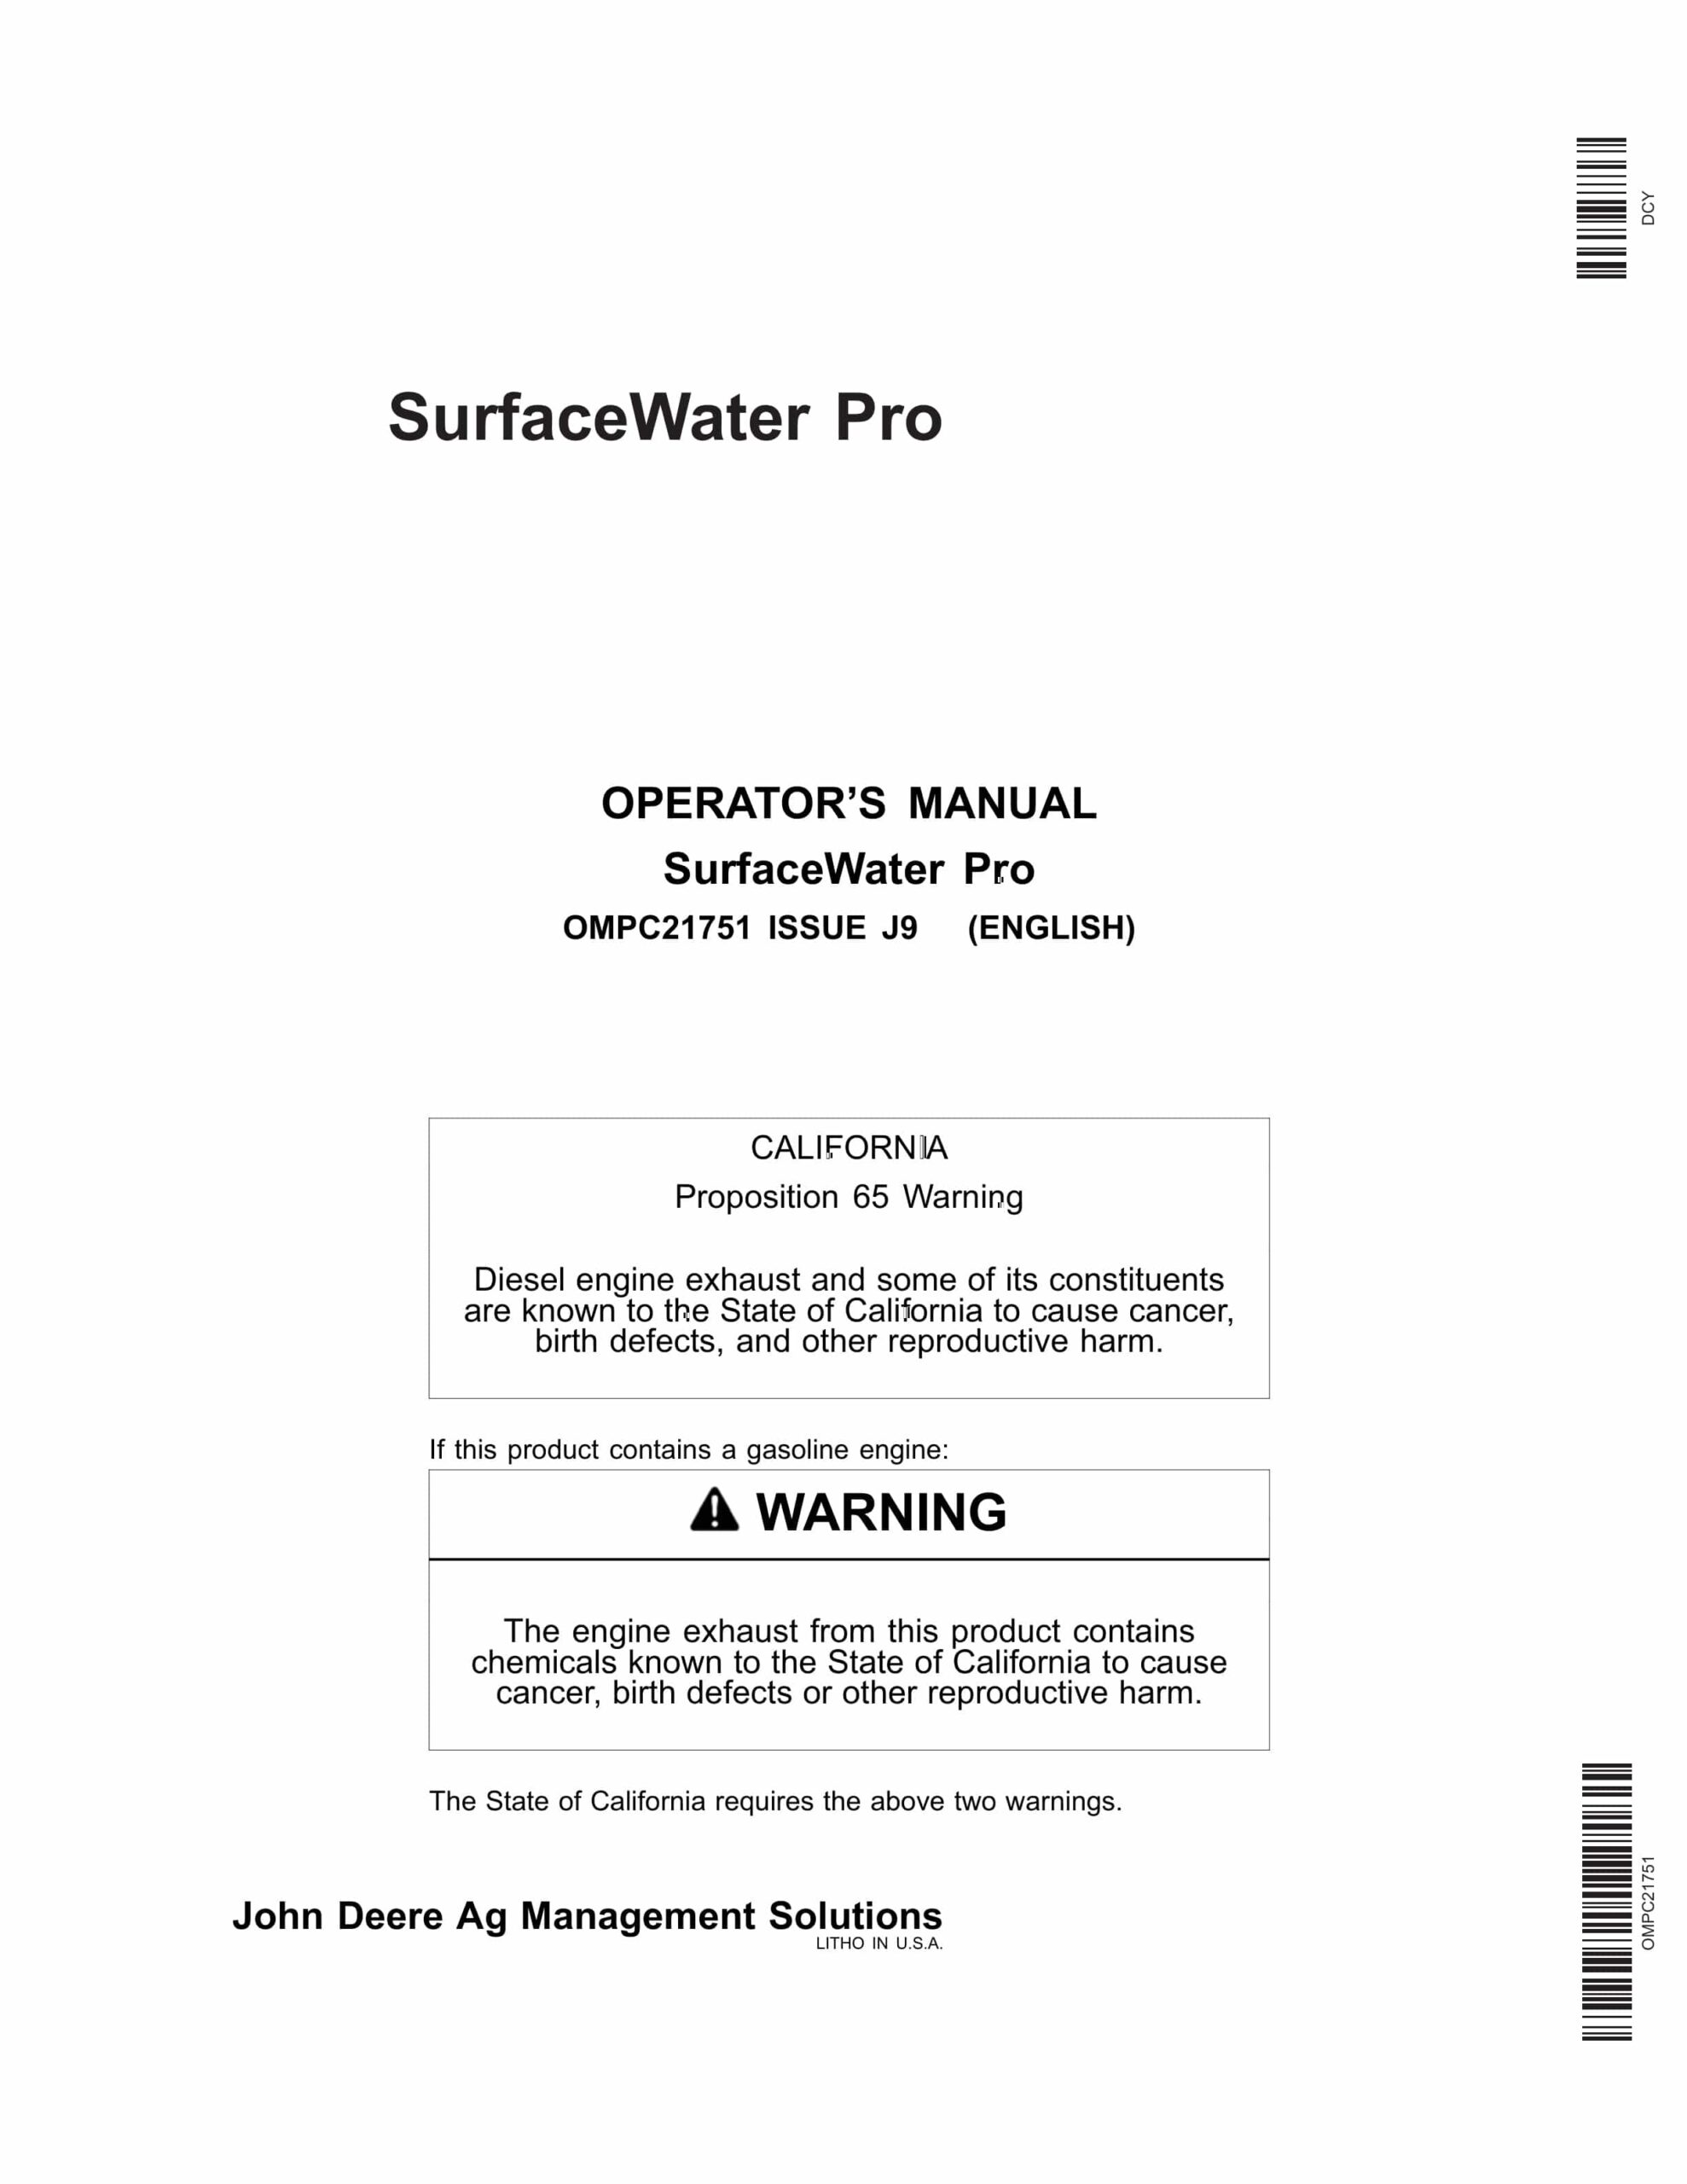 John Deere Surface Water Pro Operator Manual OMPC21751-1